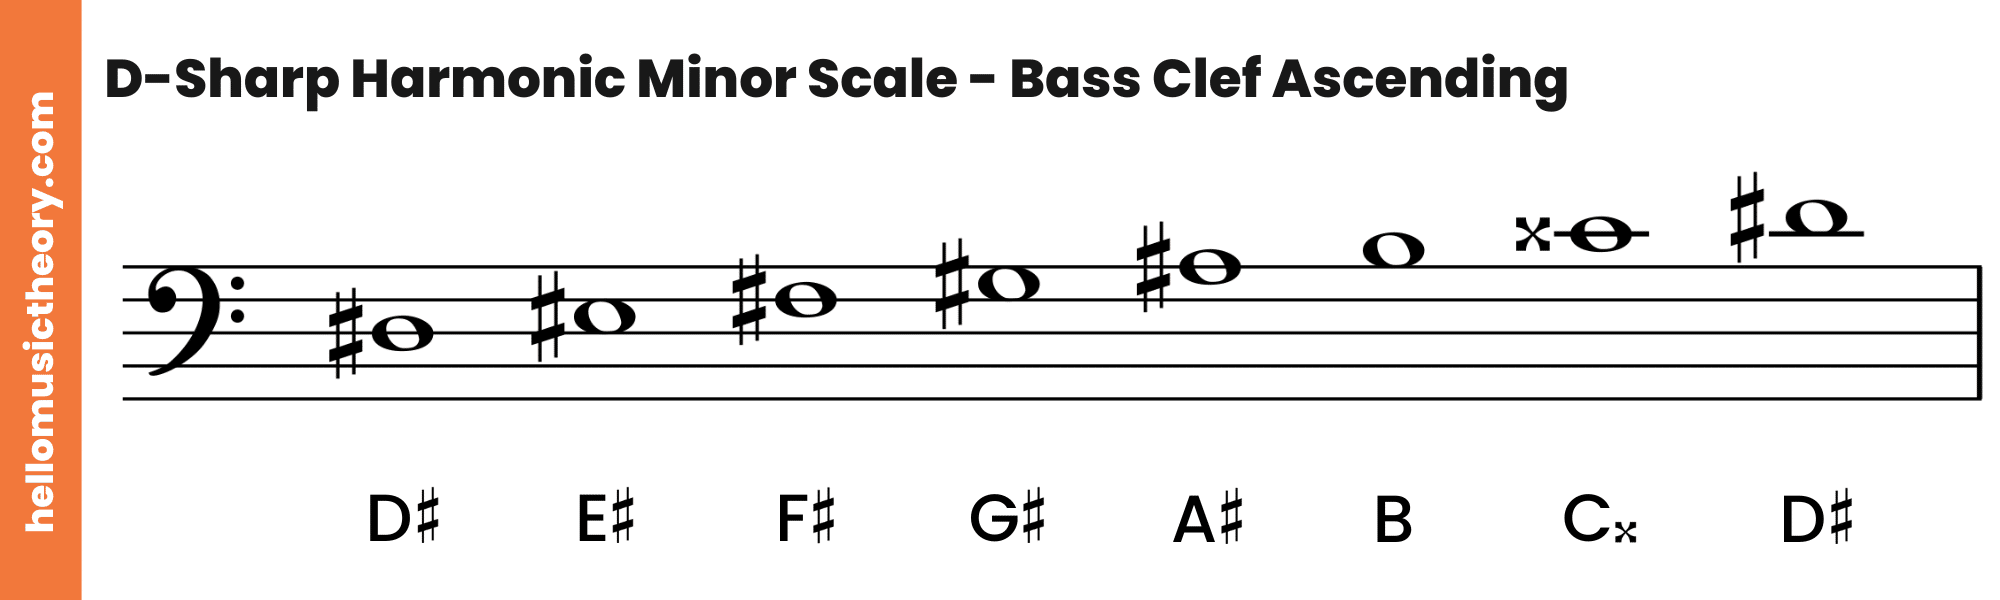 D-Sharp Harmonic Minor Scale Bass Clef Ascending